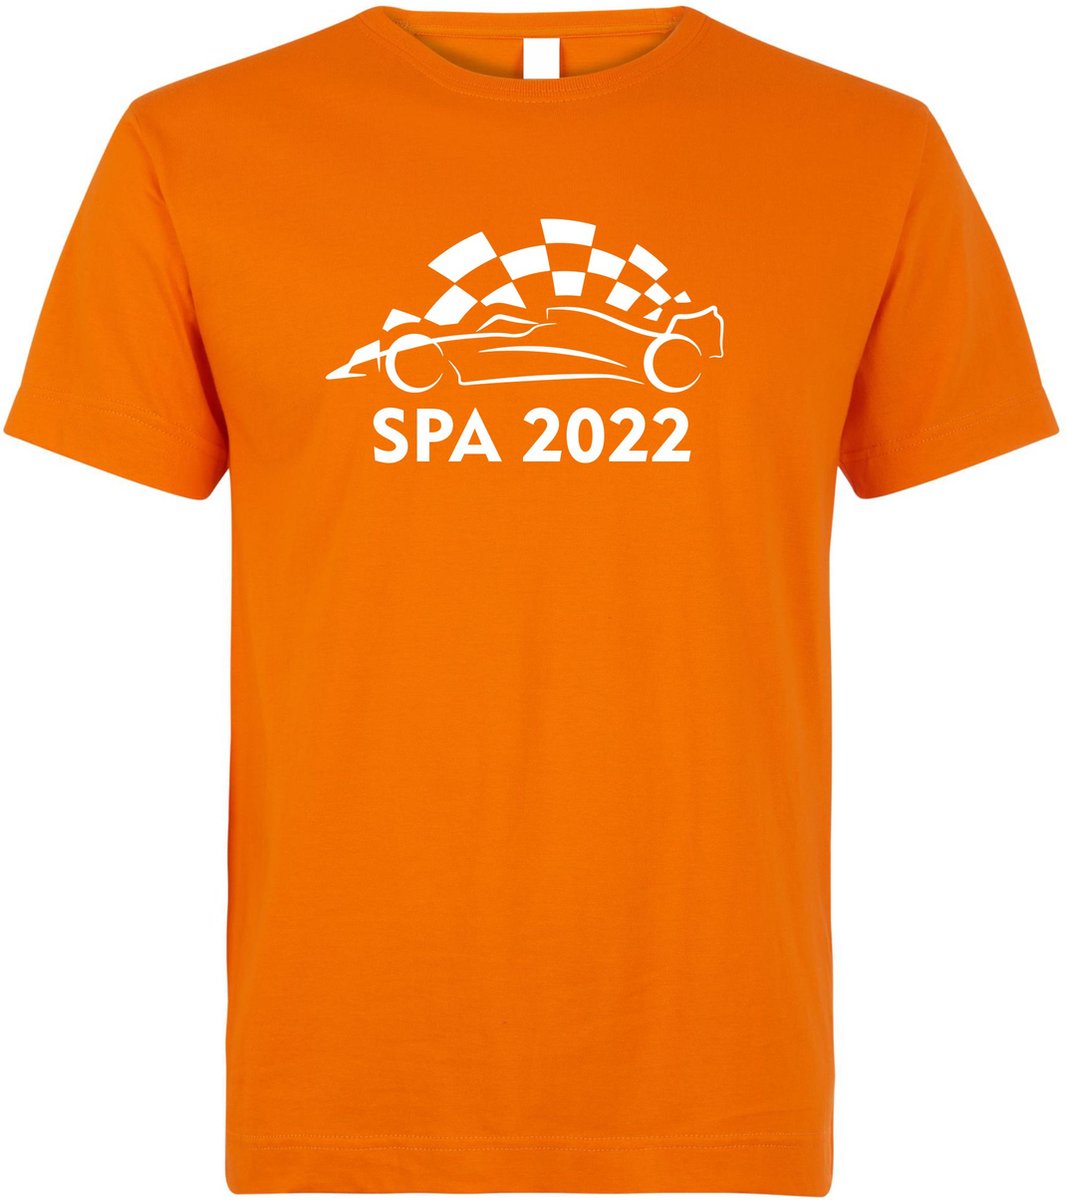 T-shirt Spa 2022 met raceauto | Max Verstappen / Red Bull Racing / Formule 1 fan | Grand Prix Circuit Spa-Francorchamps | kleding shirt | Oranje | maat 5XL